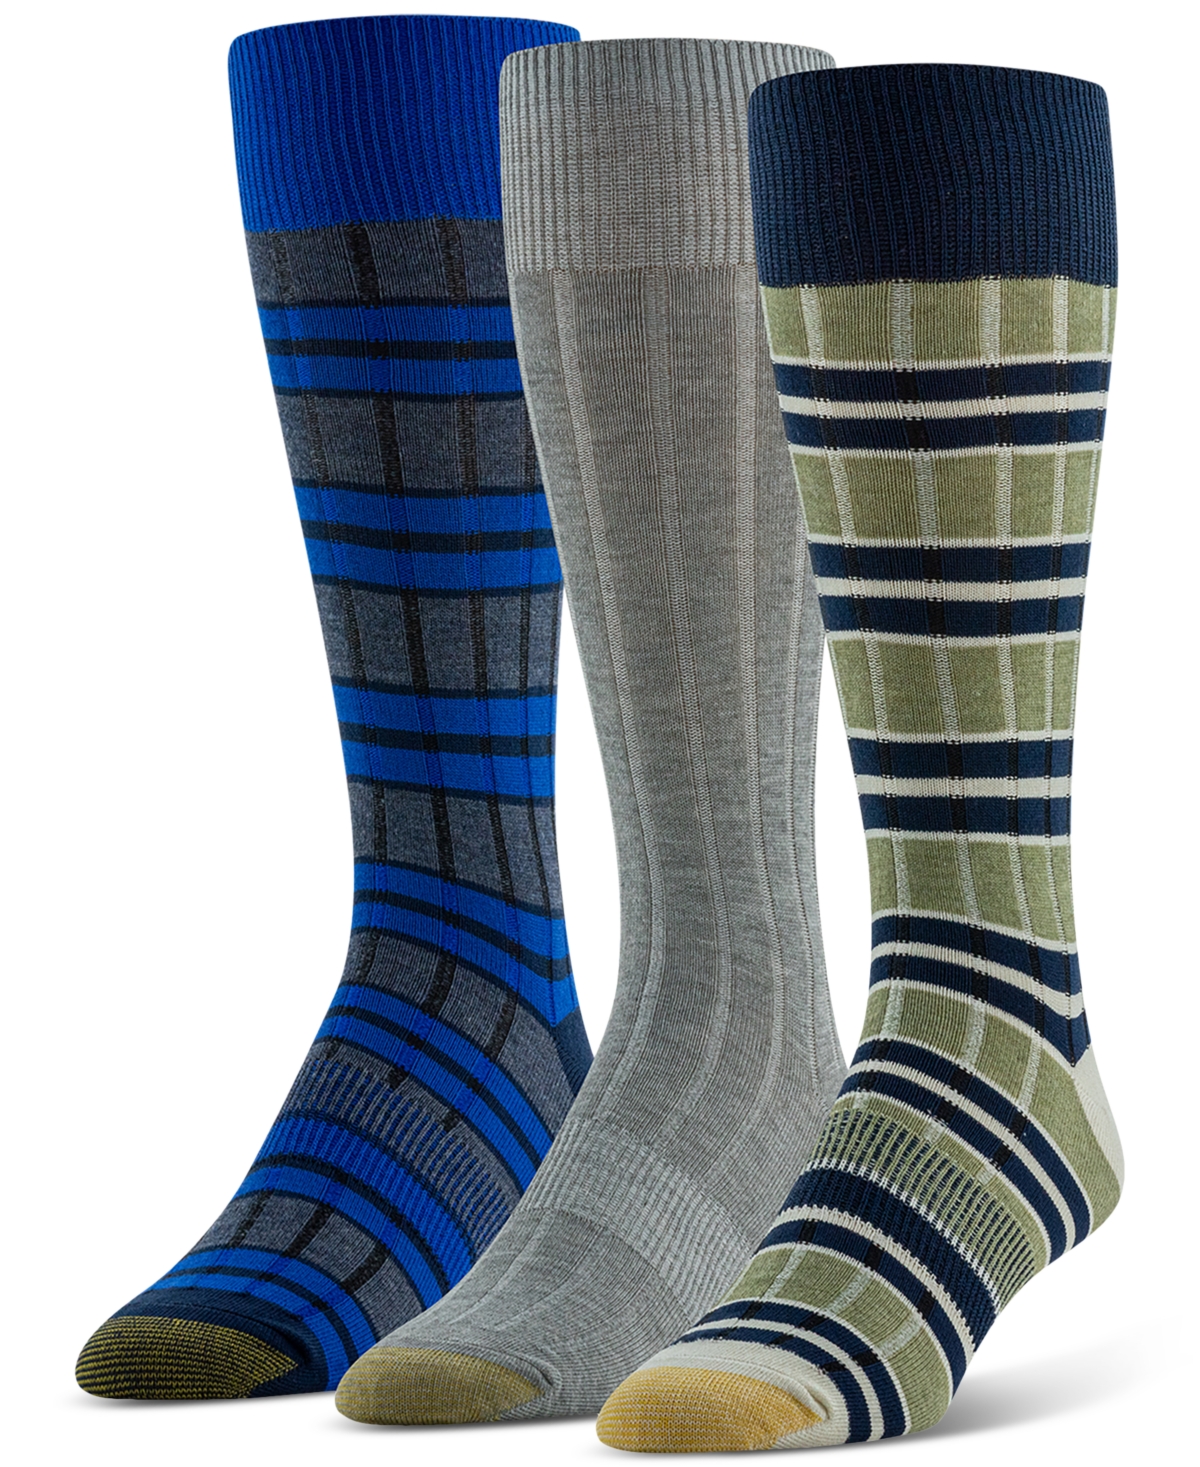 Men's Regatta Striped Socks - 3 pk. - Asst